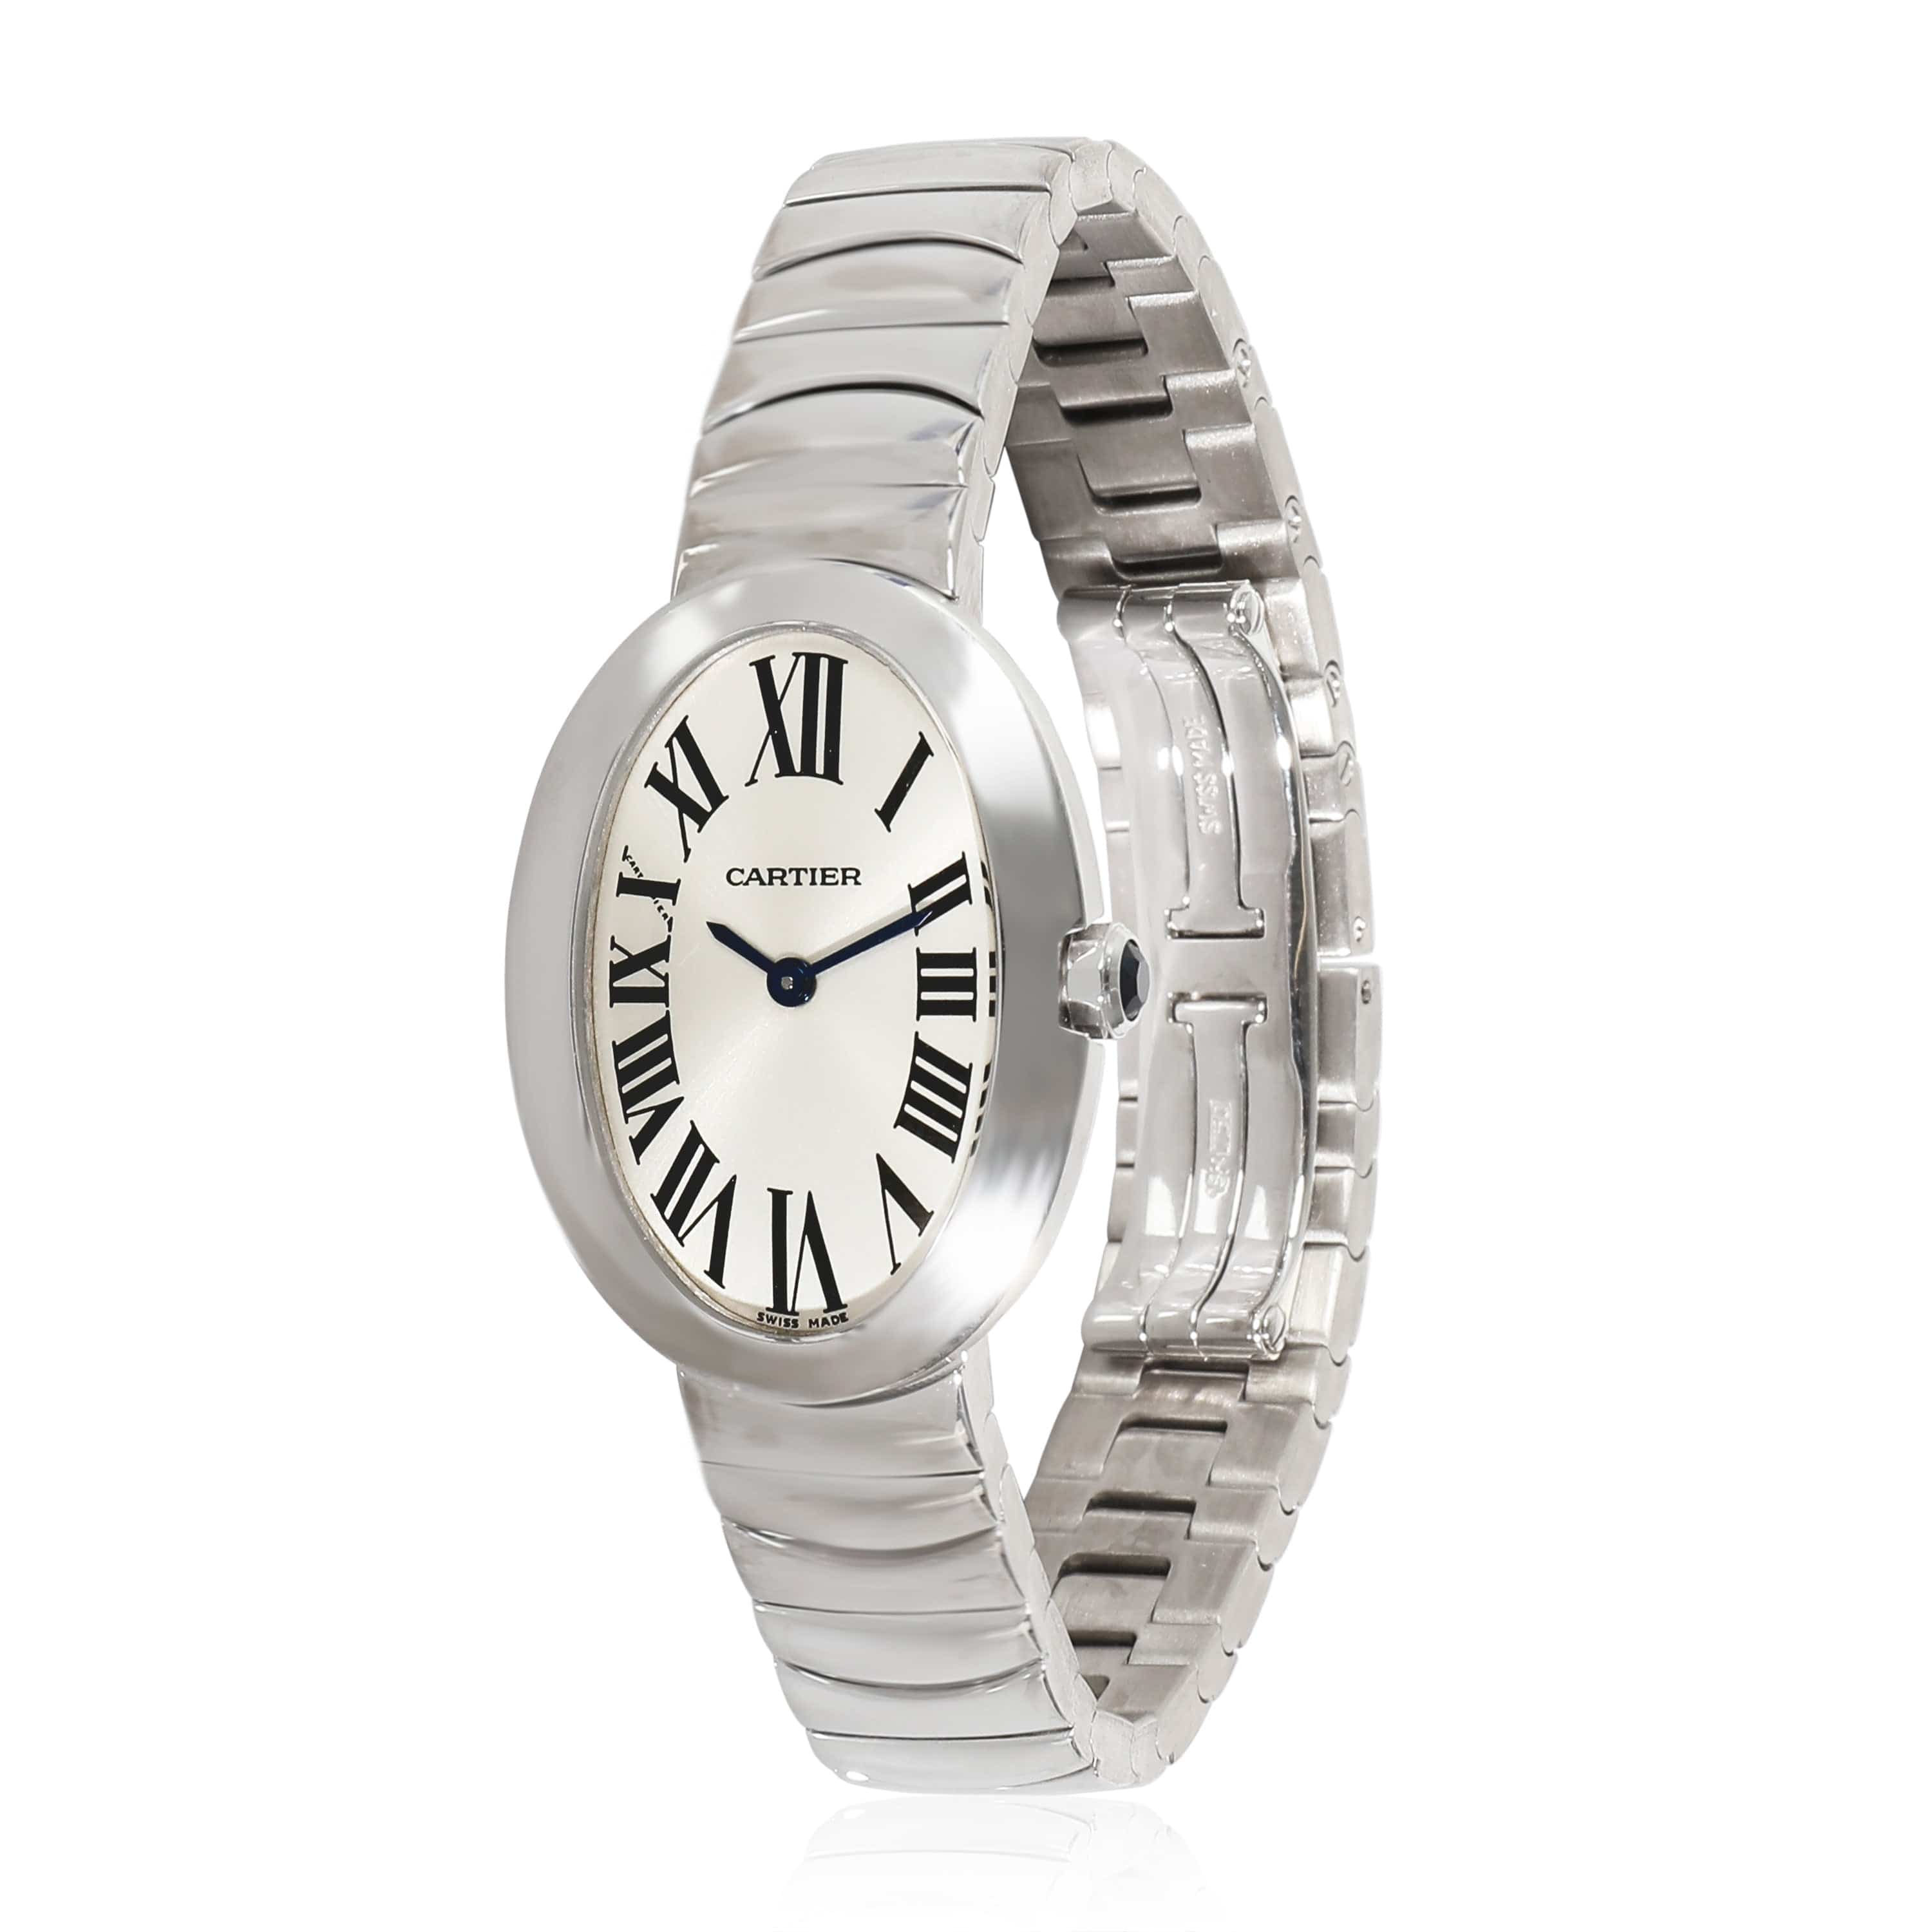 Cartier Cartier Baignoire de Cartier W8000006 Women's Watch in 18kt White Gold